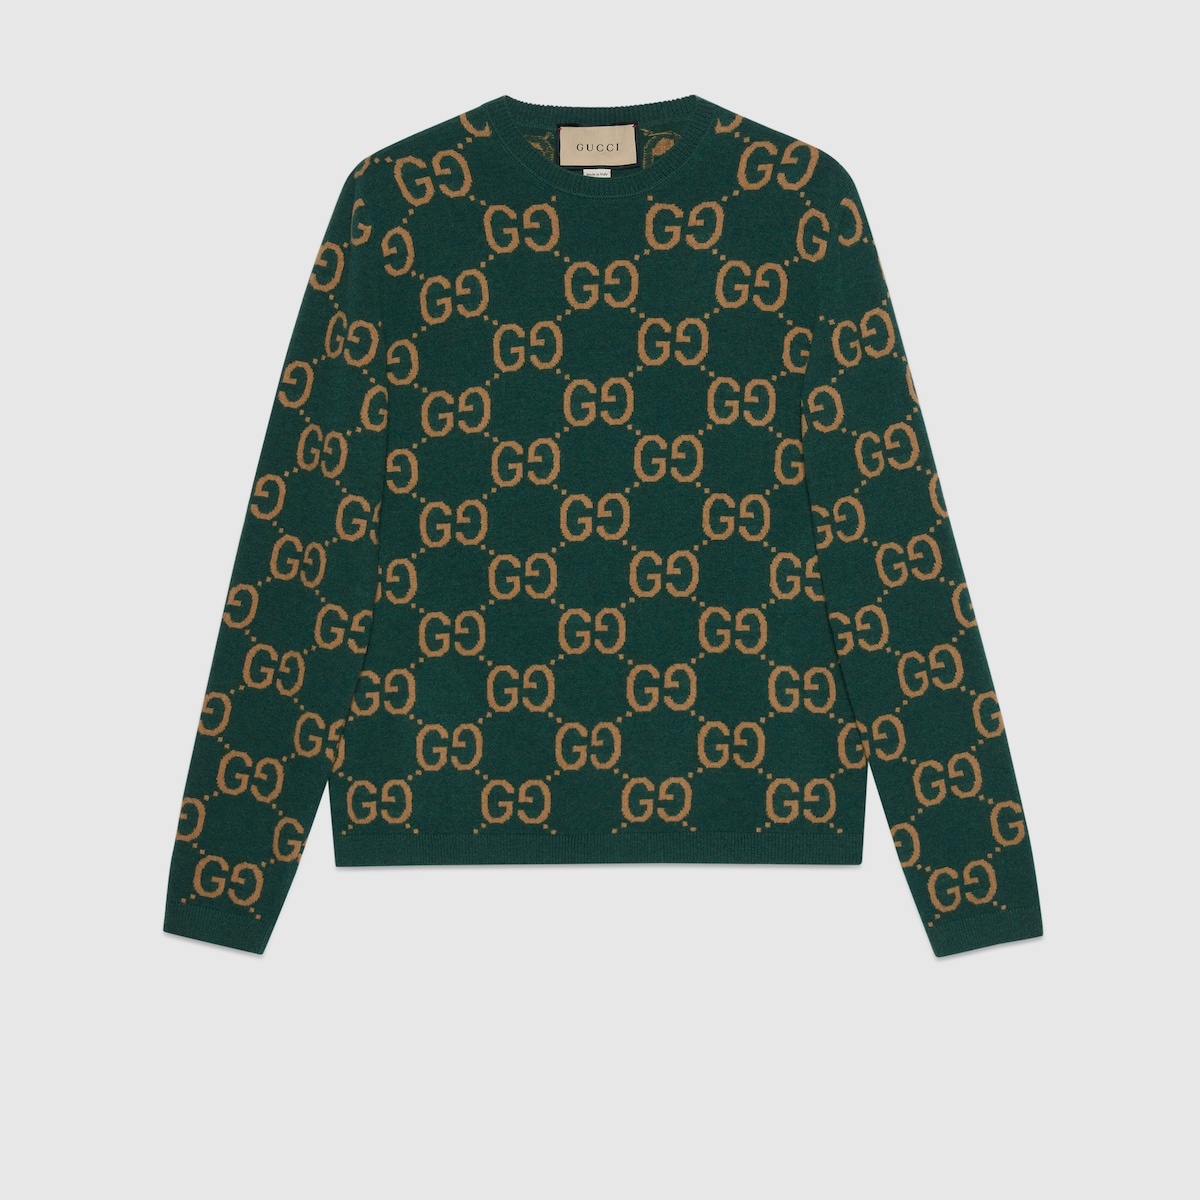 GG wool jacquard sweater - 1